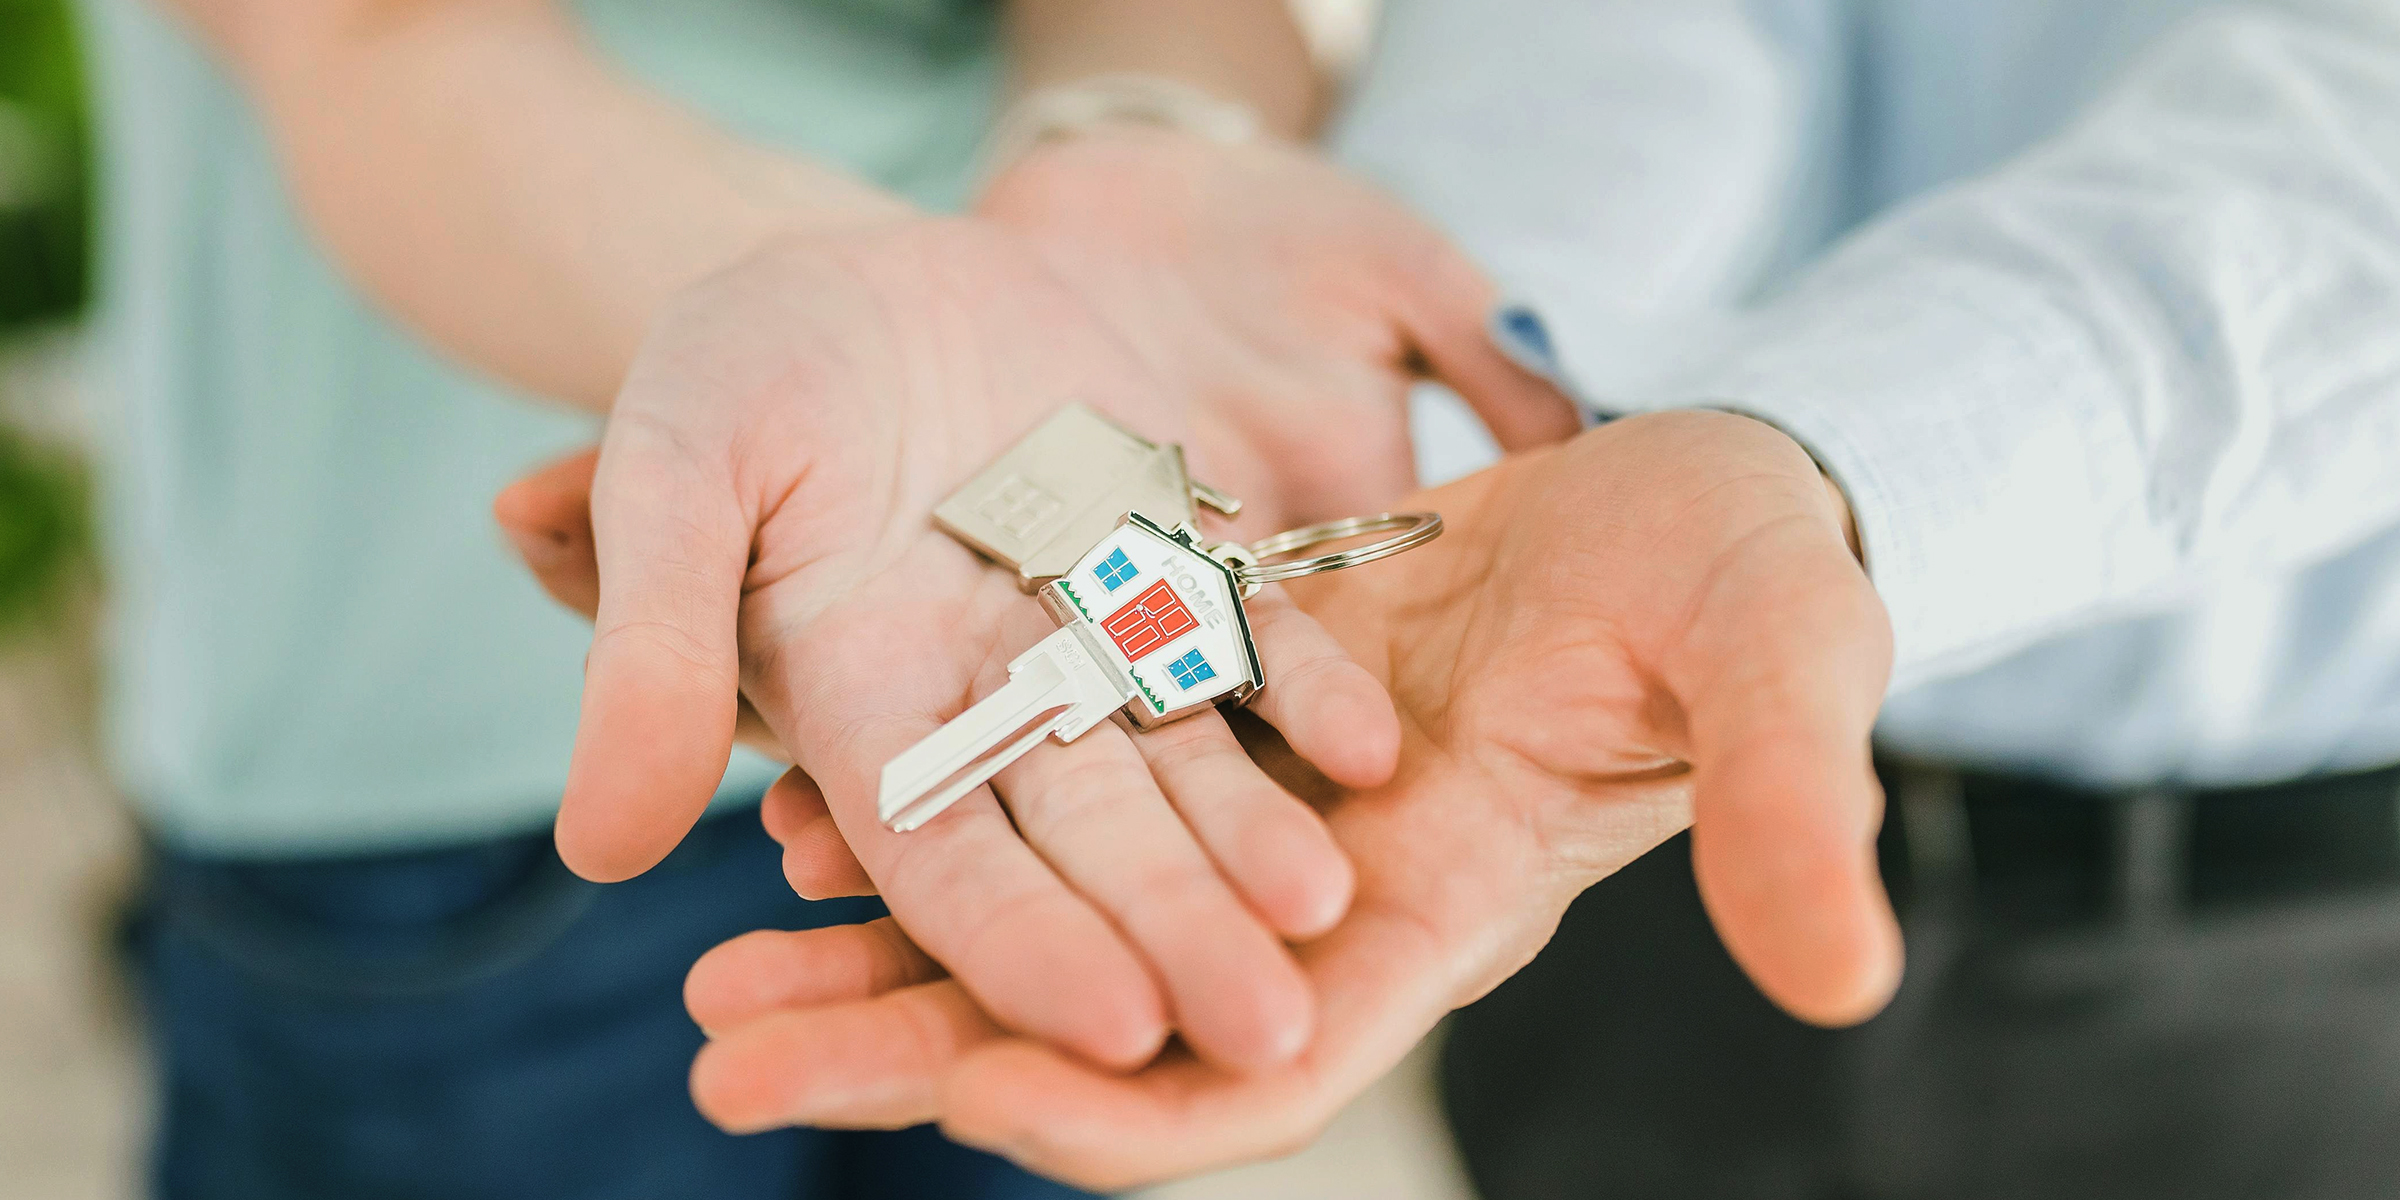 A pair of house keys on a couple's hands | Source: pexels.com/rdne